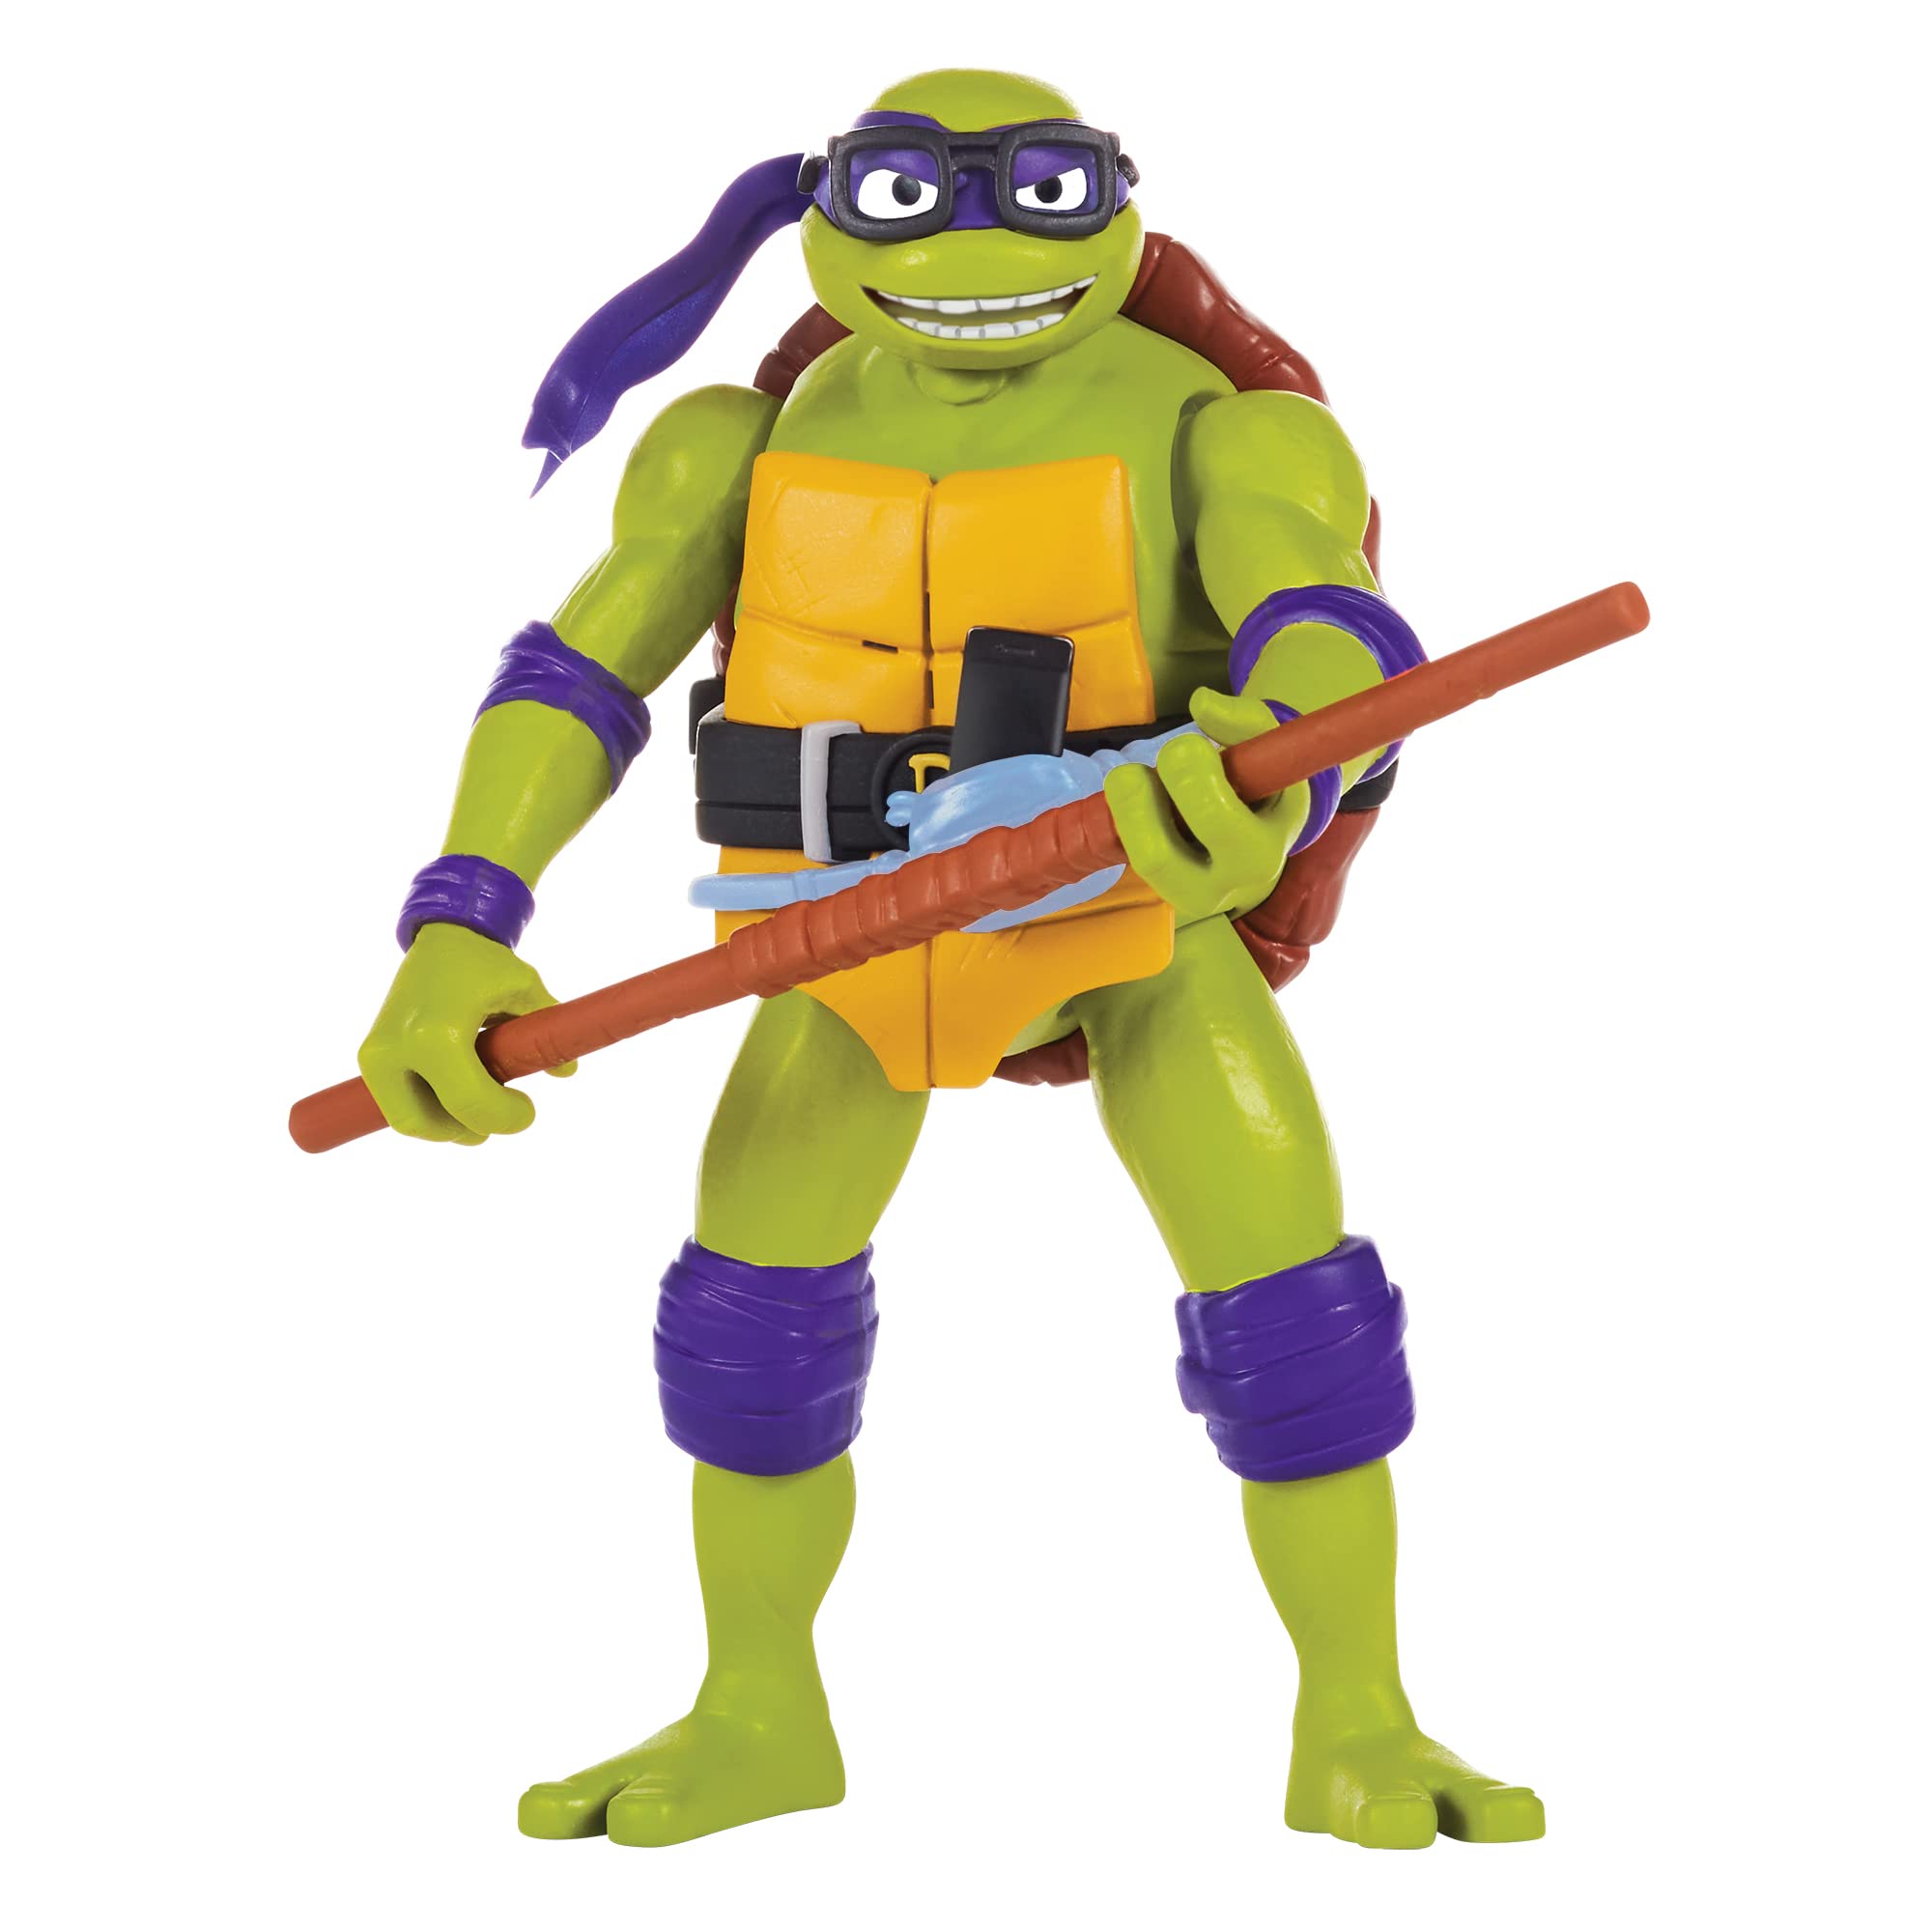 5.5” Teenage Mutant Ninja Turtles: Mutant Mayhem Donatello Deluxe Ninja Shouts Figure $4.95 + Free Shipping w/ Prime or on orders over $35